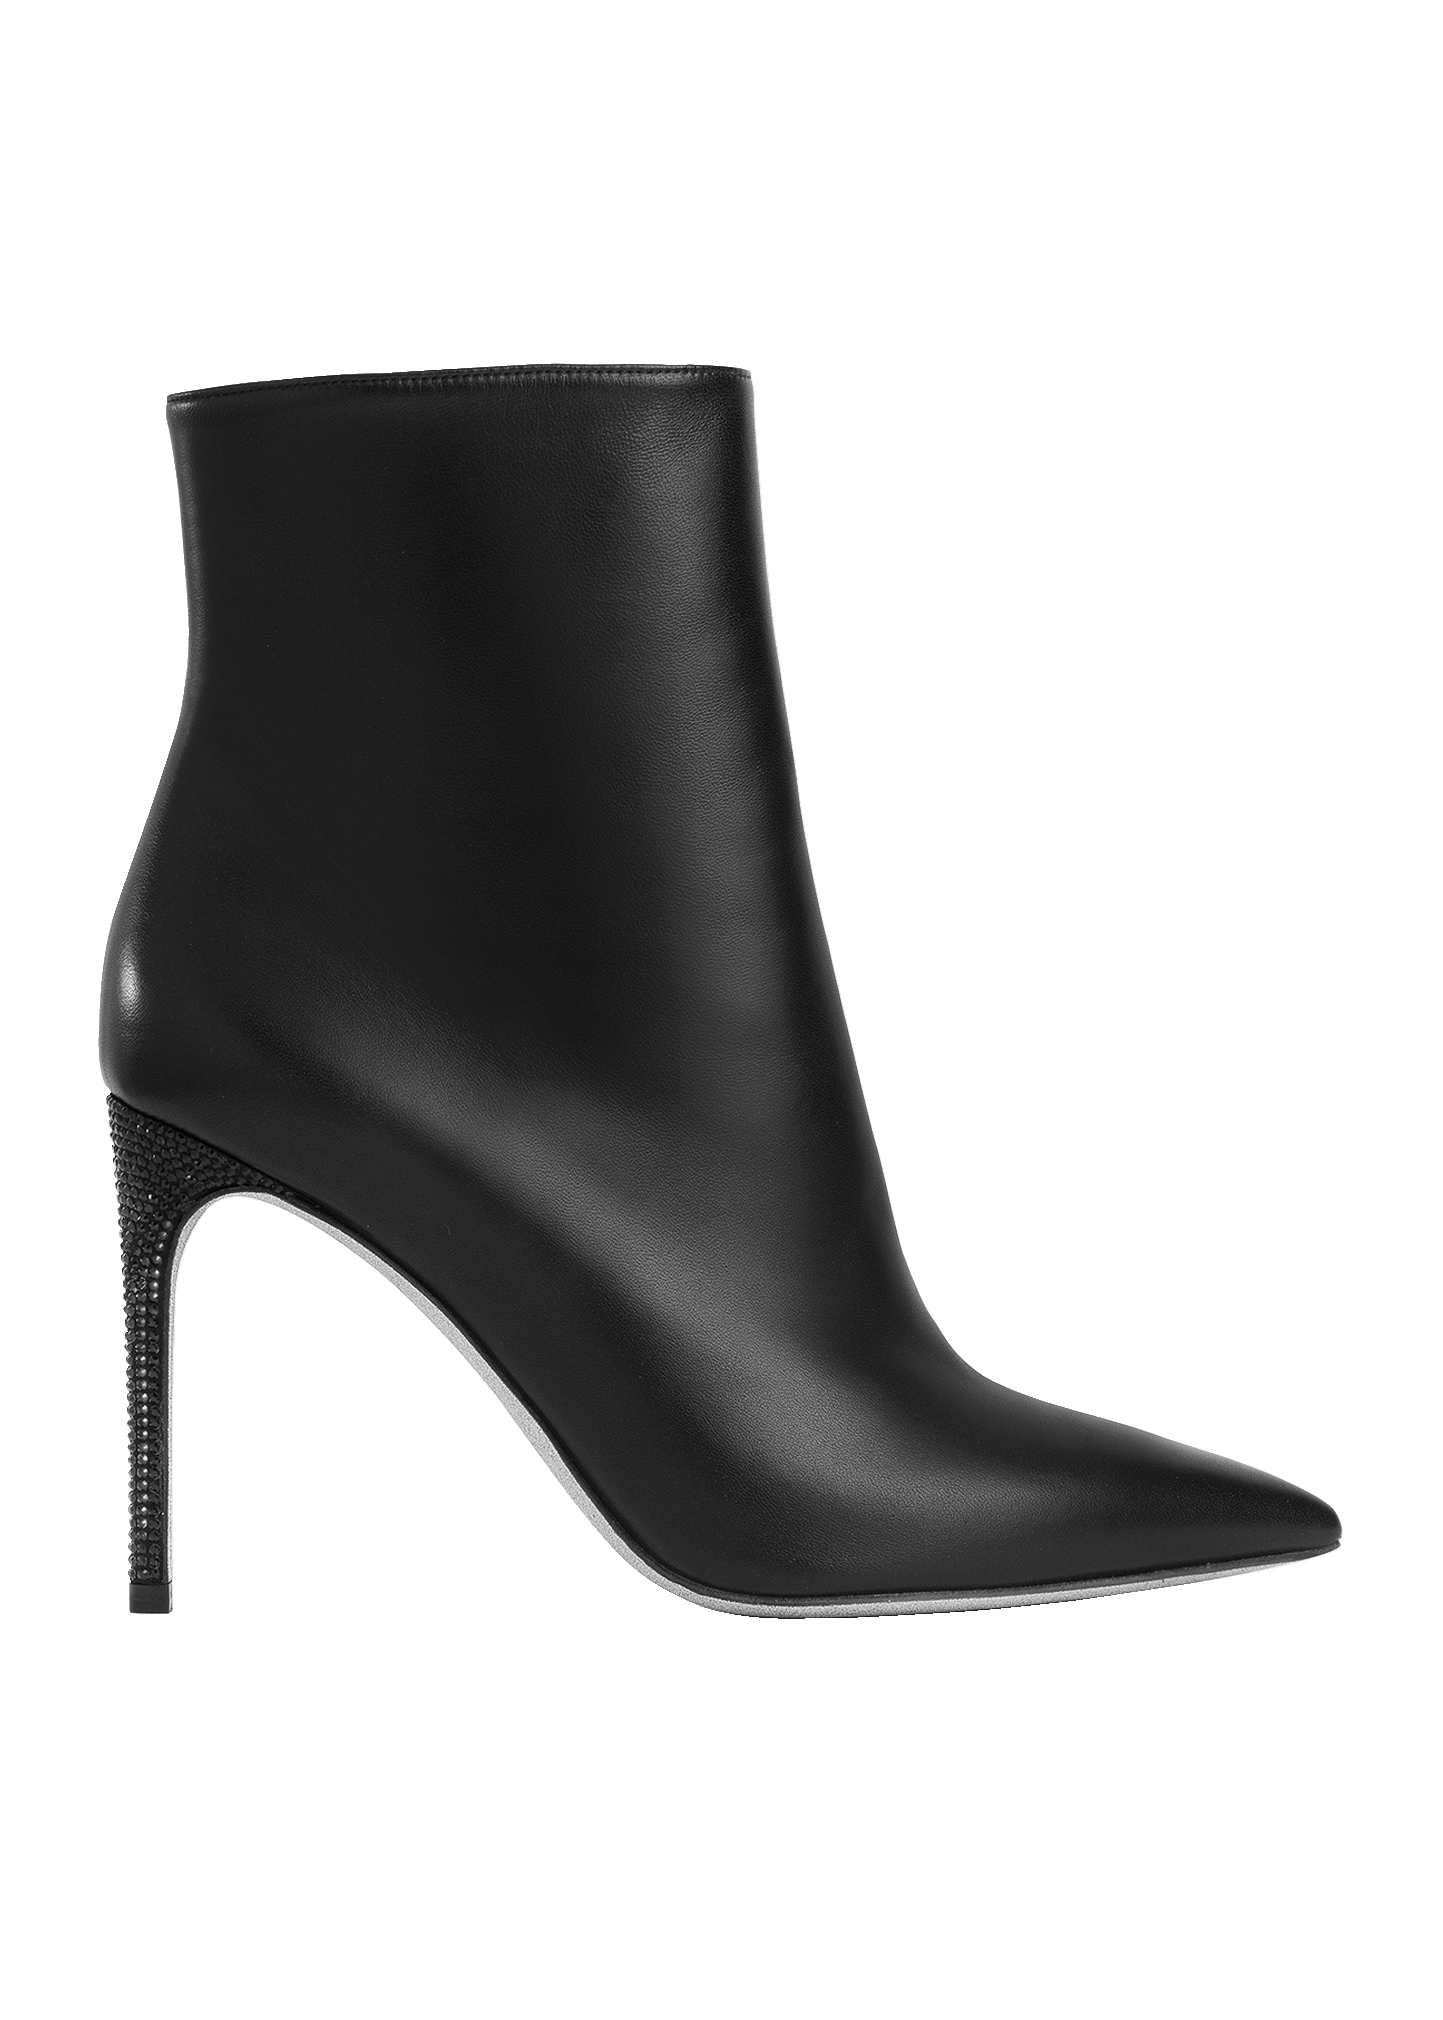 Valentino Garavani Rockstud Leather Ankle Booties - Bergdorf Goodman